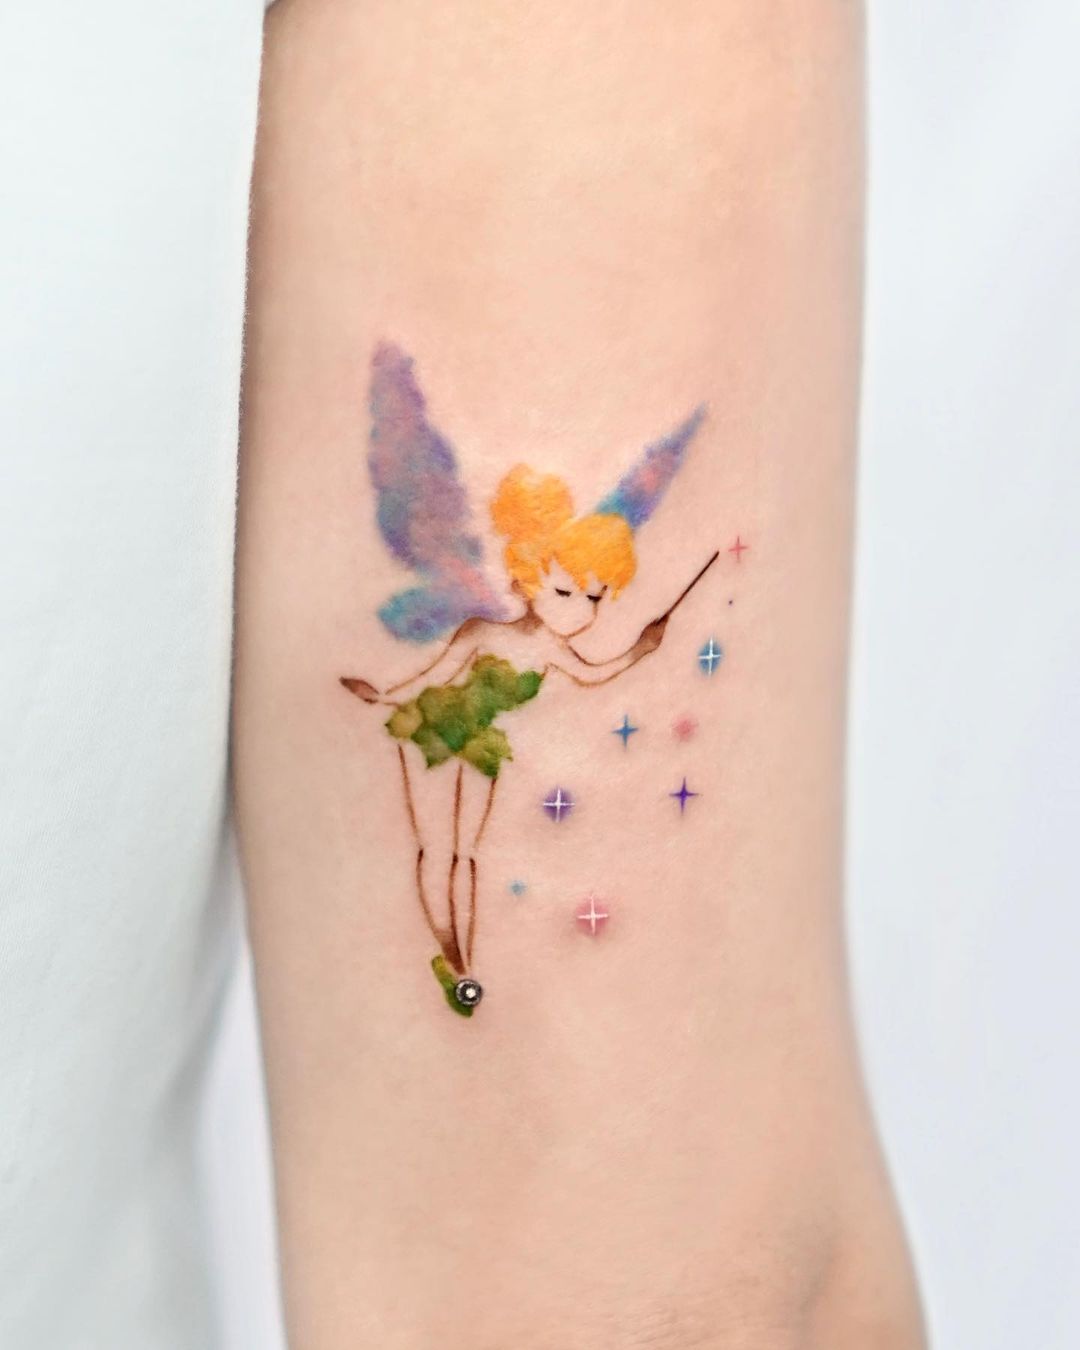 Watercolor tattoo on arm by tattooist hei